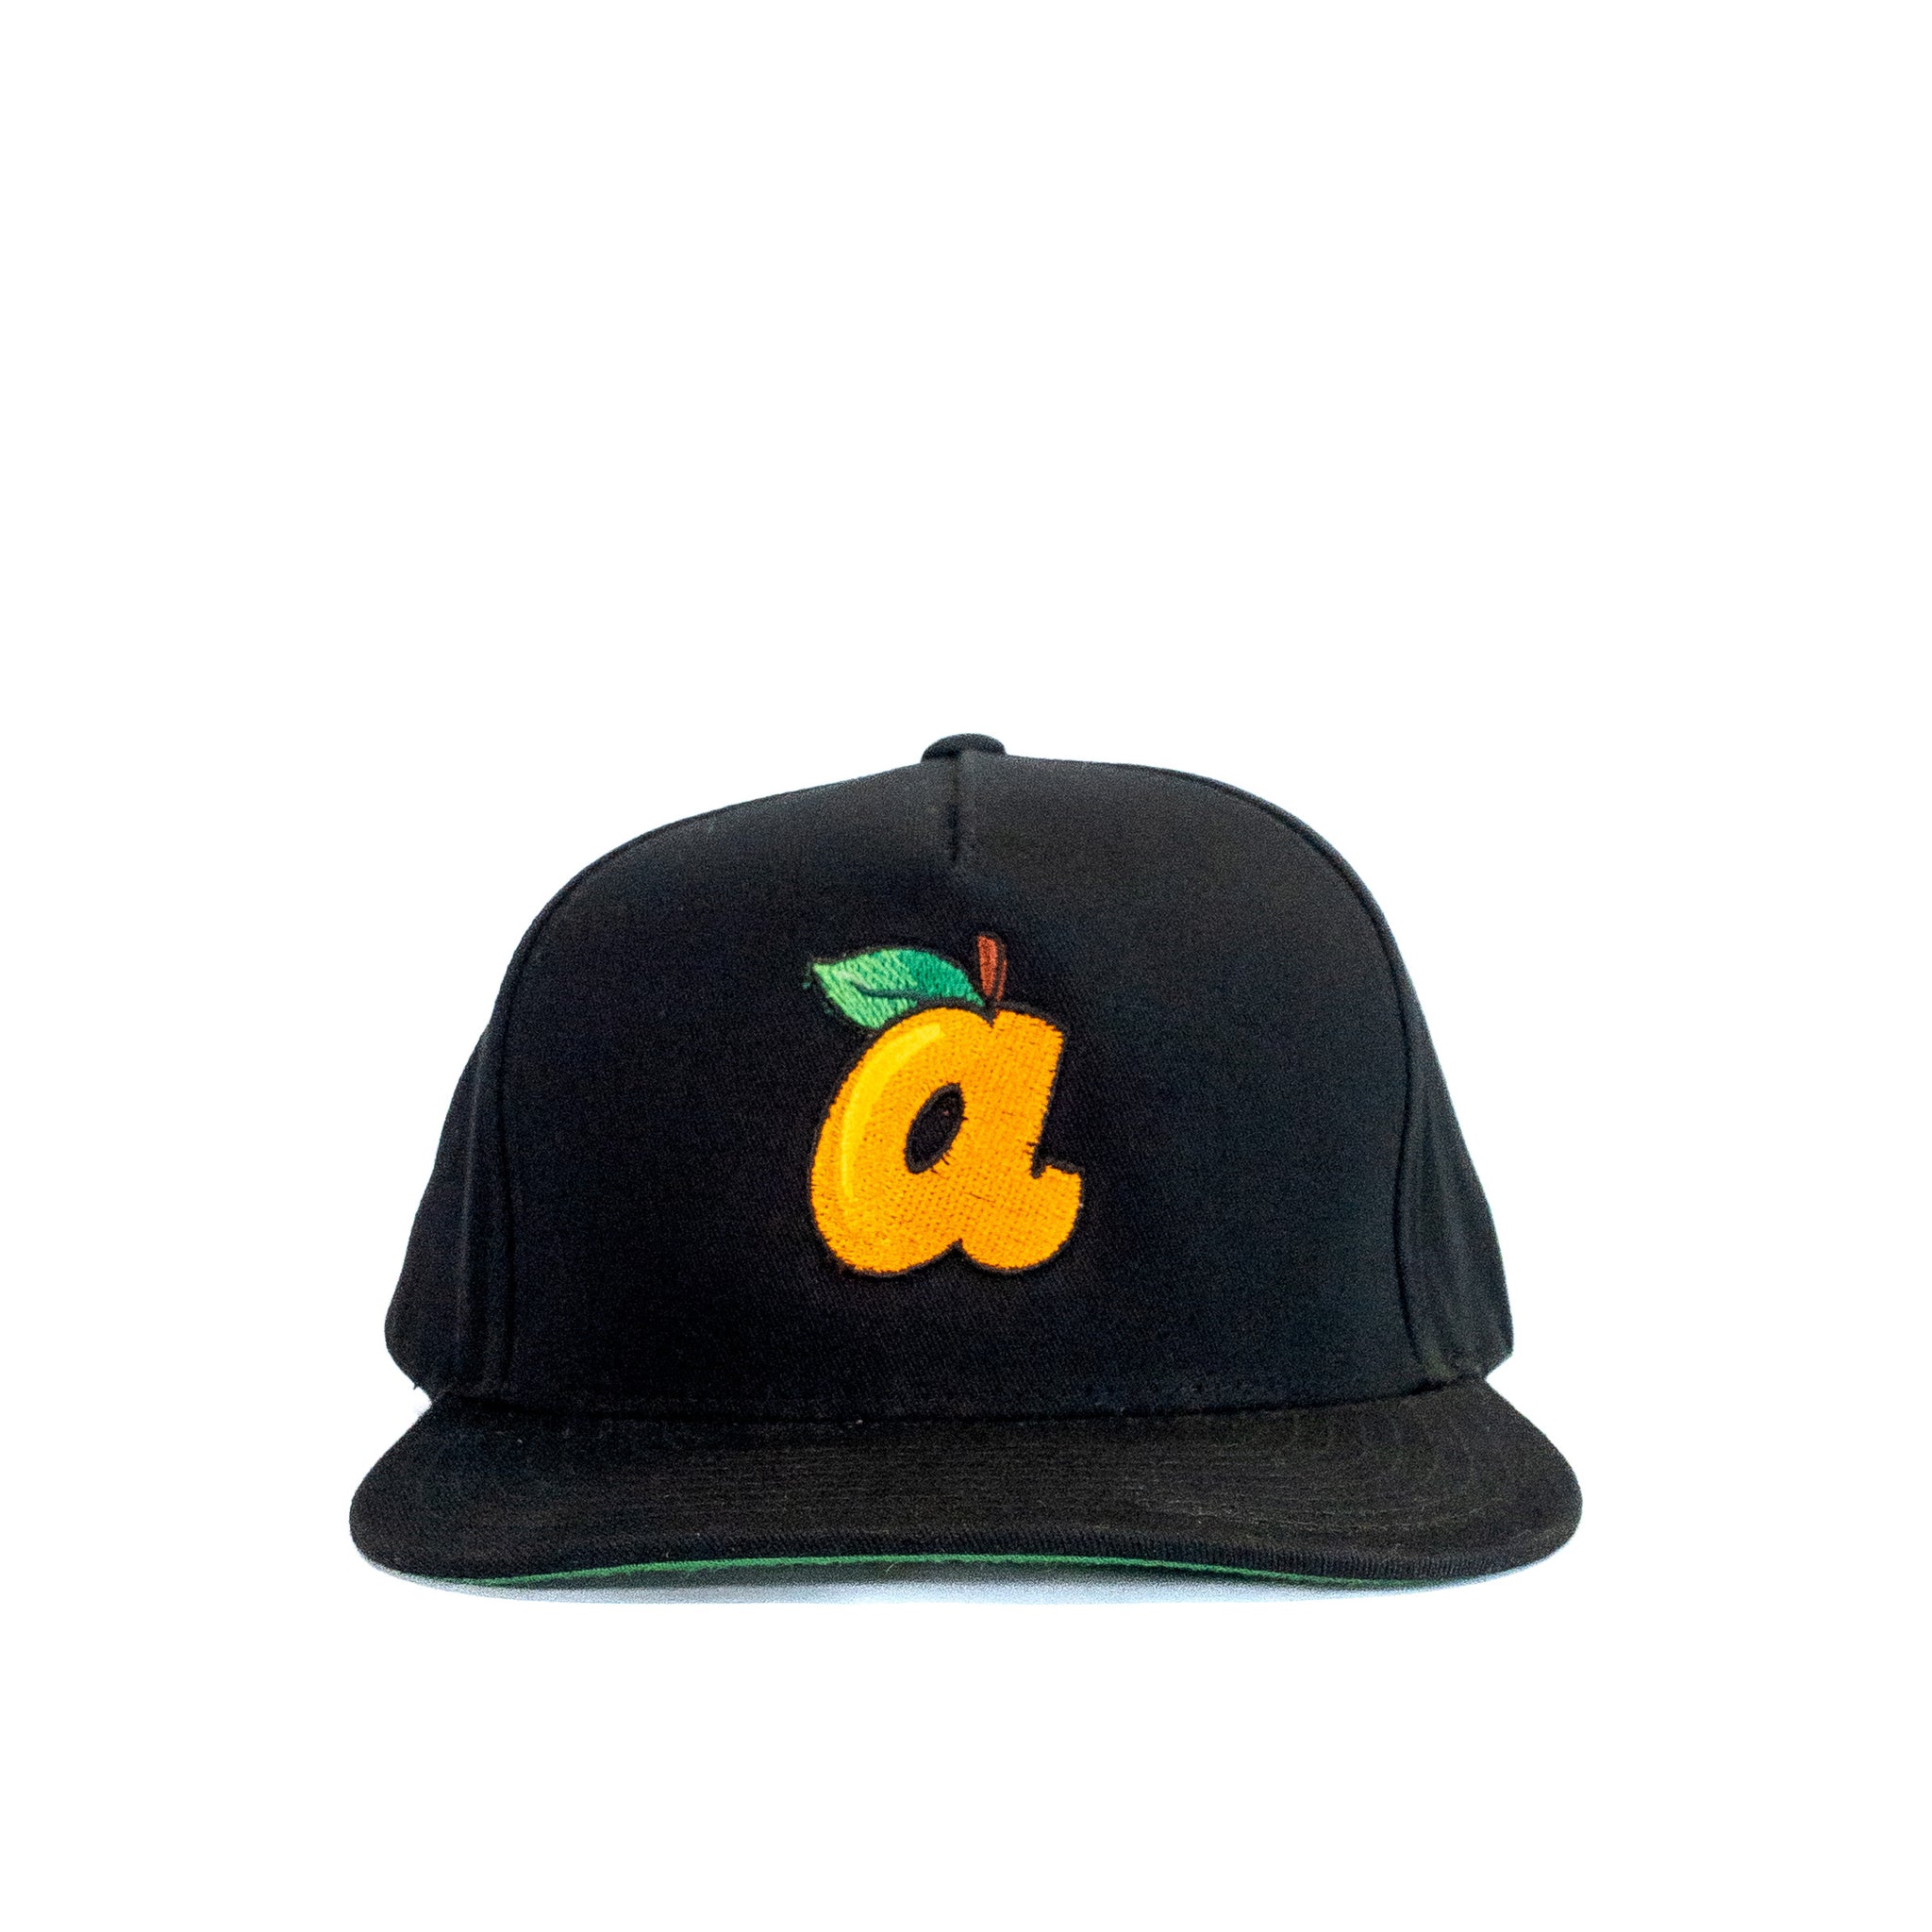 A Peach Cap by Bside Studio (2023) Black/Green brim